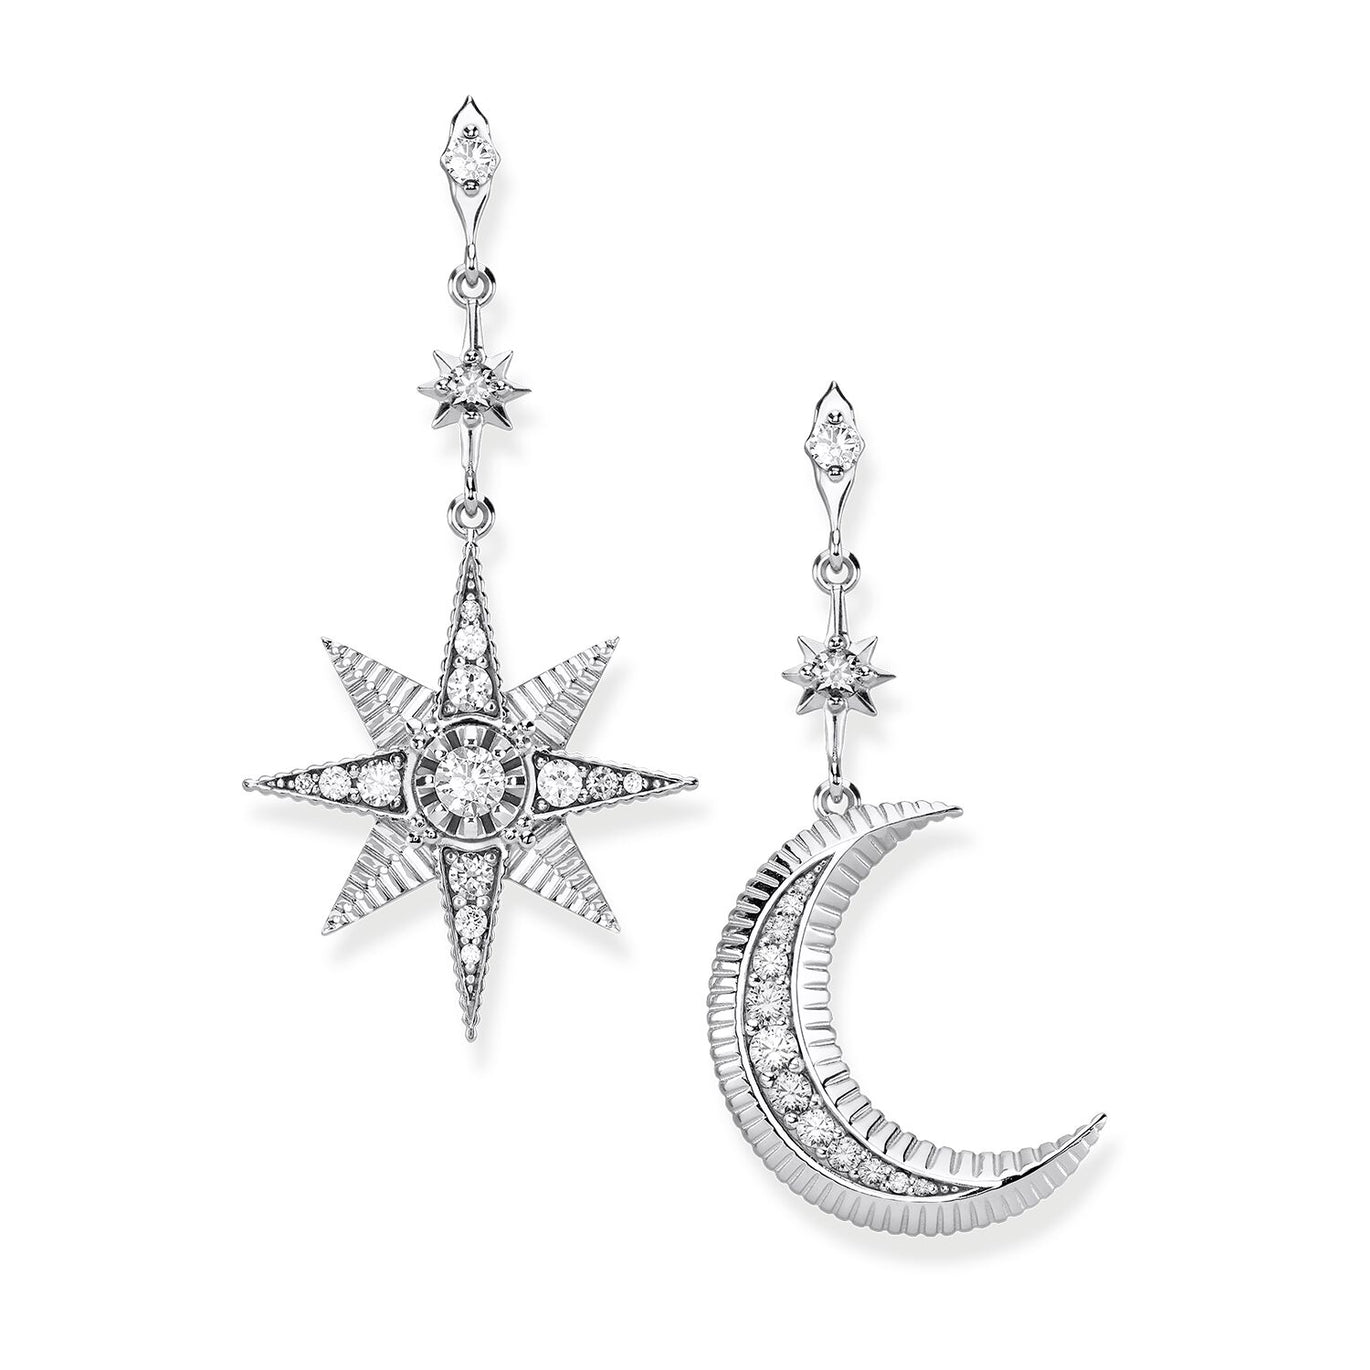 Thomas Sabo Royalty Star and Moon Drop Earrings